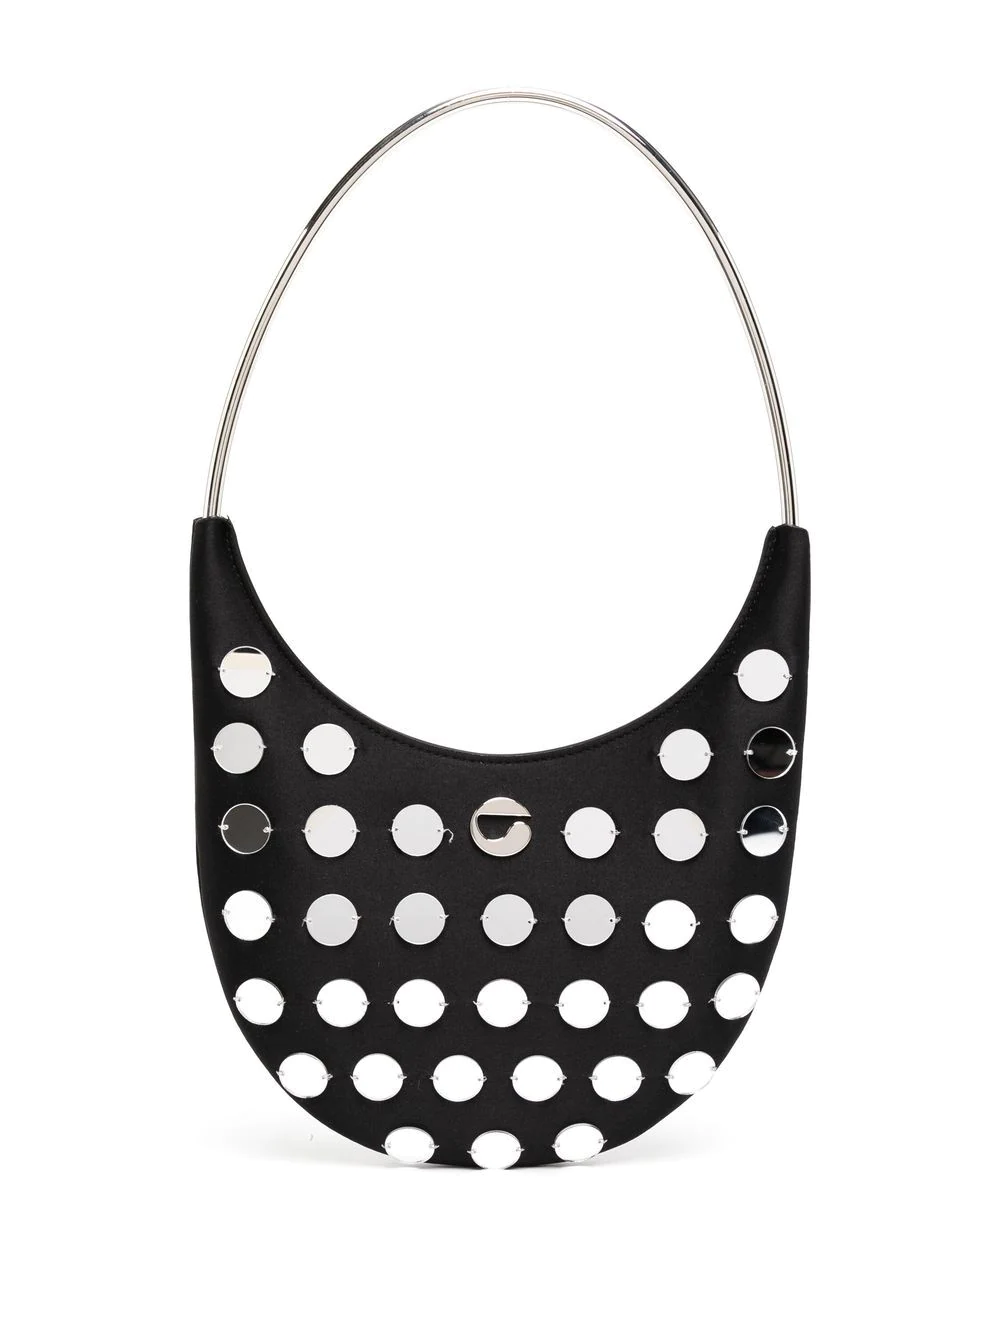 Black Friday: Designer Handbags for an Additional Discount